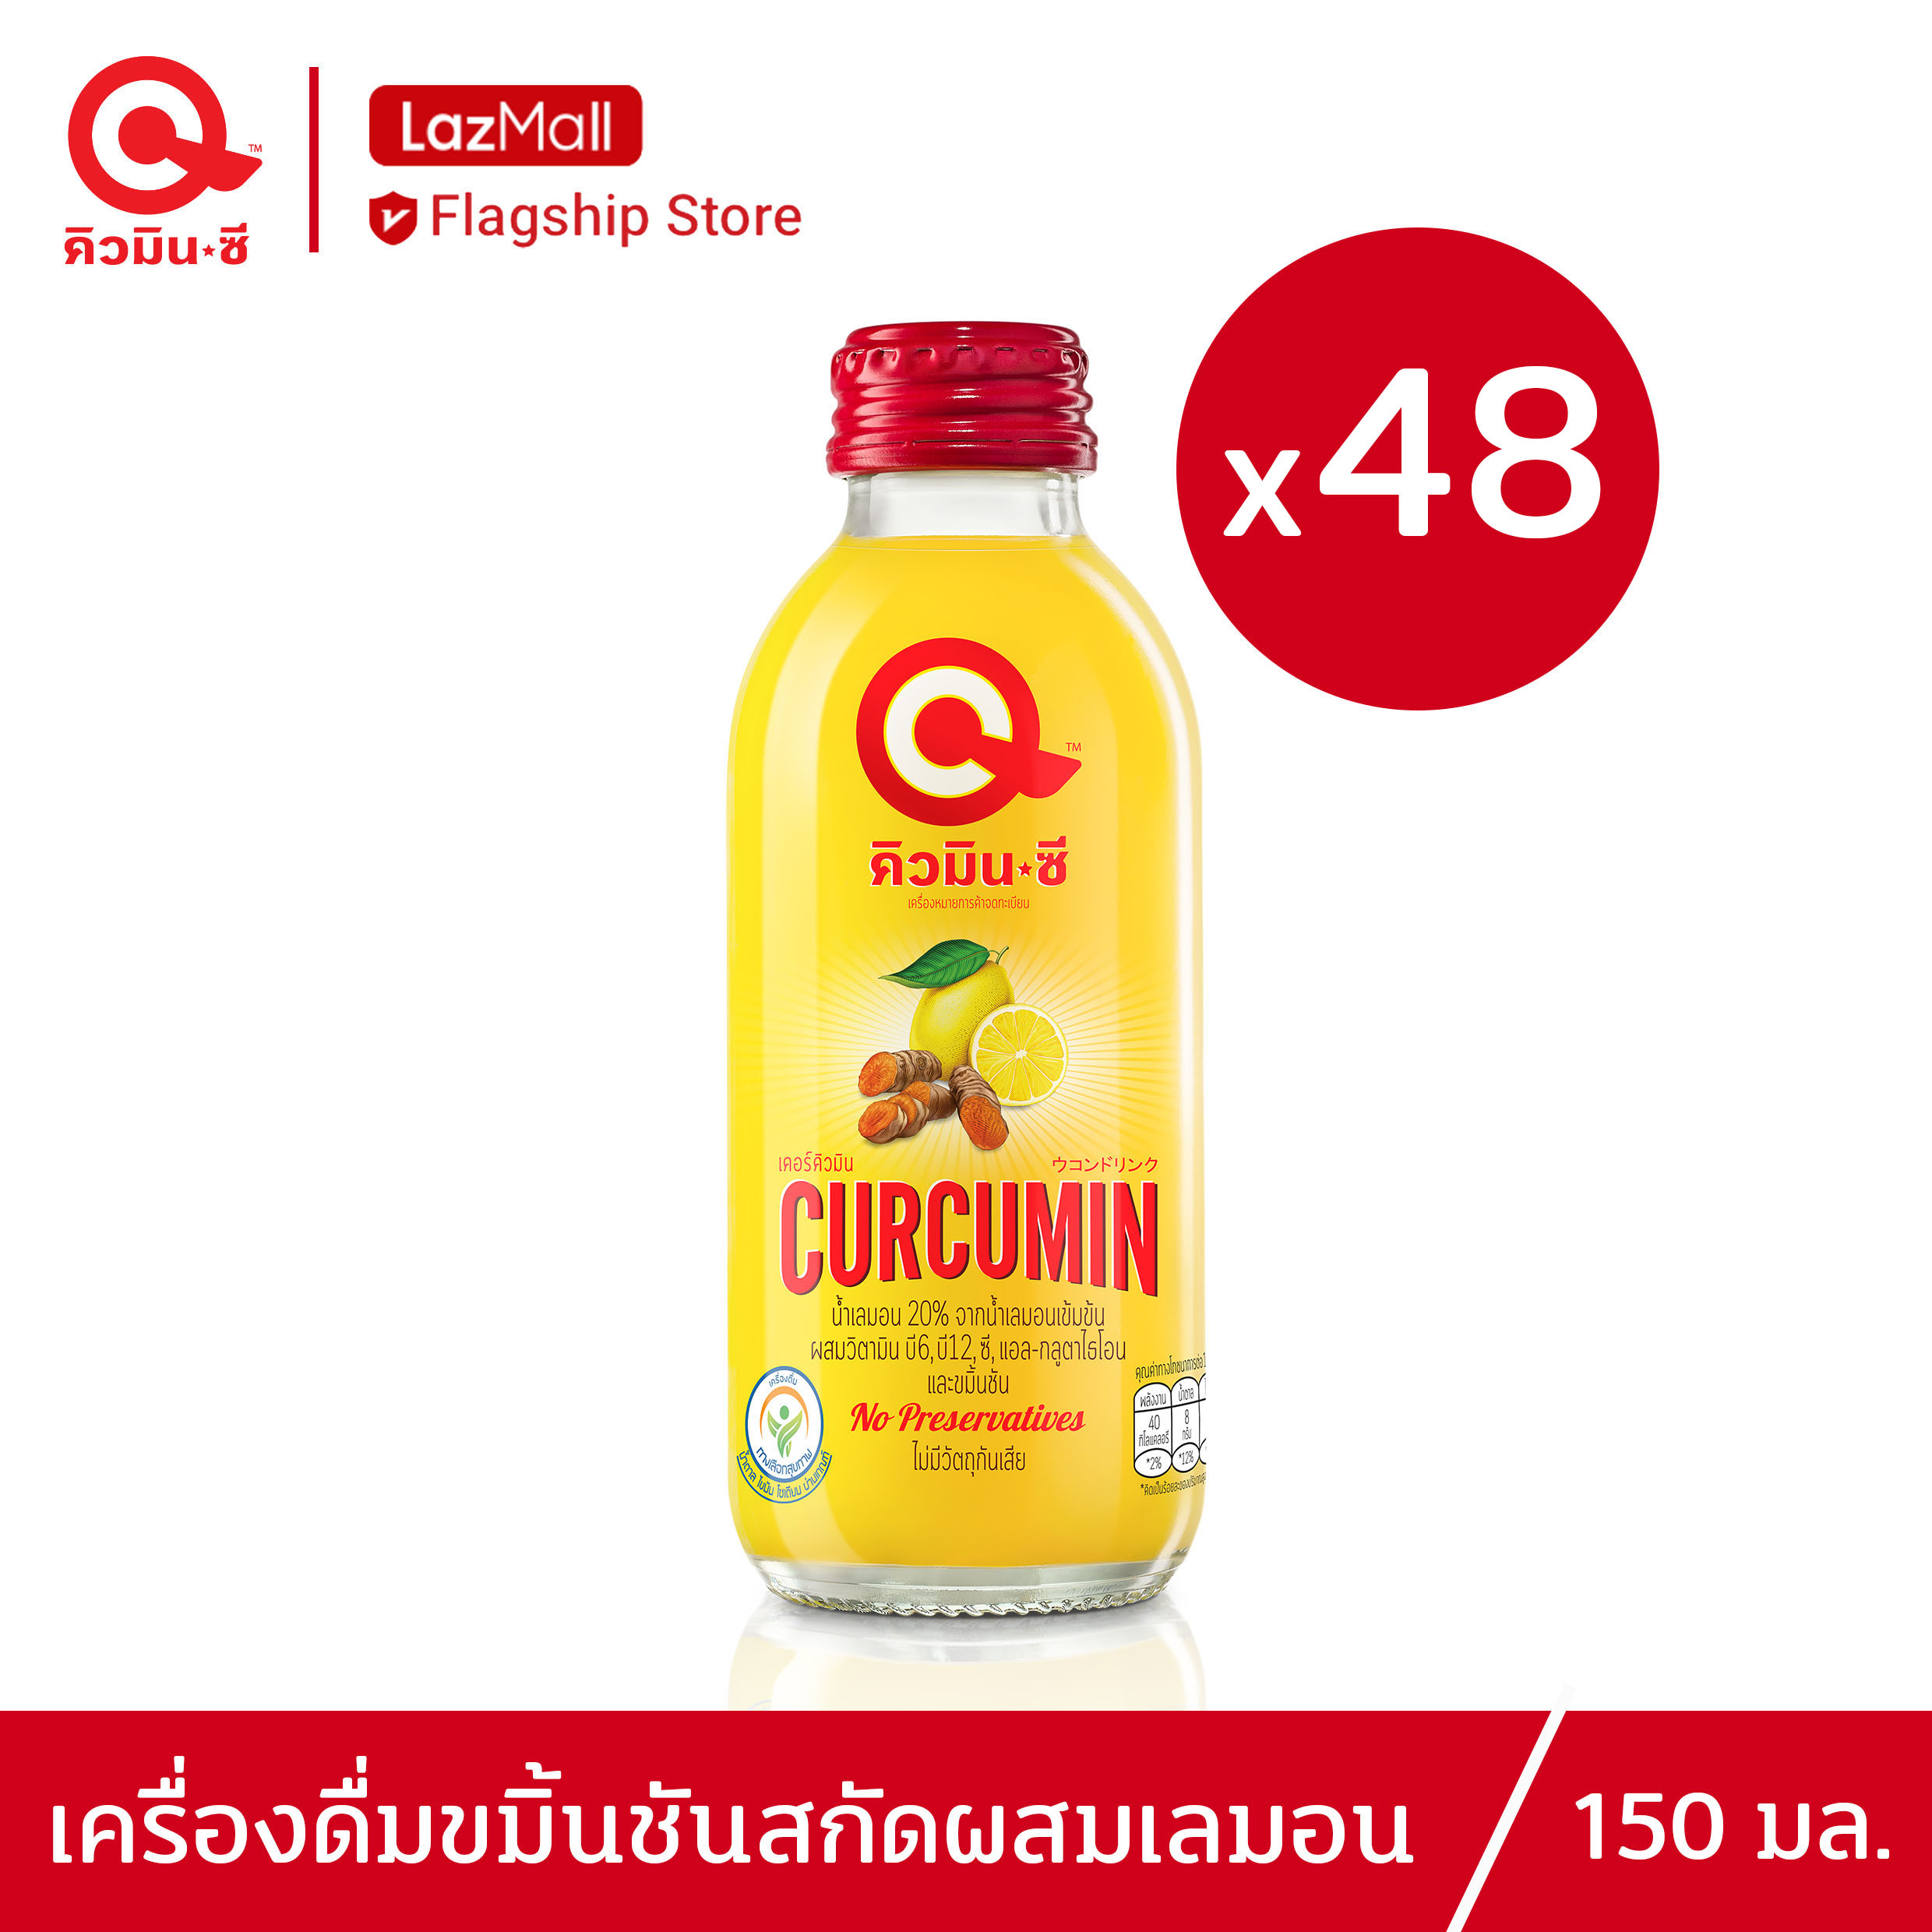 QminC คิวมินซี เครื่องดื่มขมิ้นชันสกัดผสมเลมอน 2 ลัง (48 ขวด) QminC Health drink with curcumin extracted with lemon juice 2 Cartons (48 Bottles)